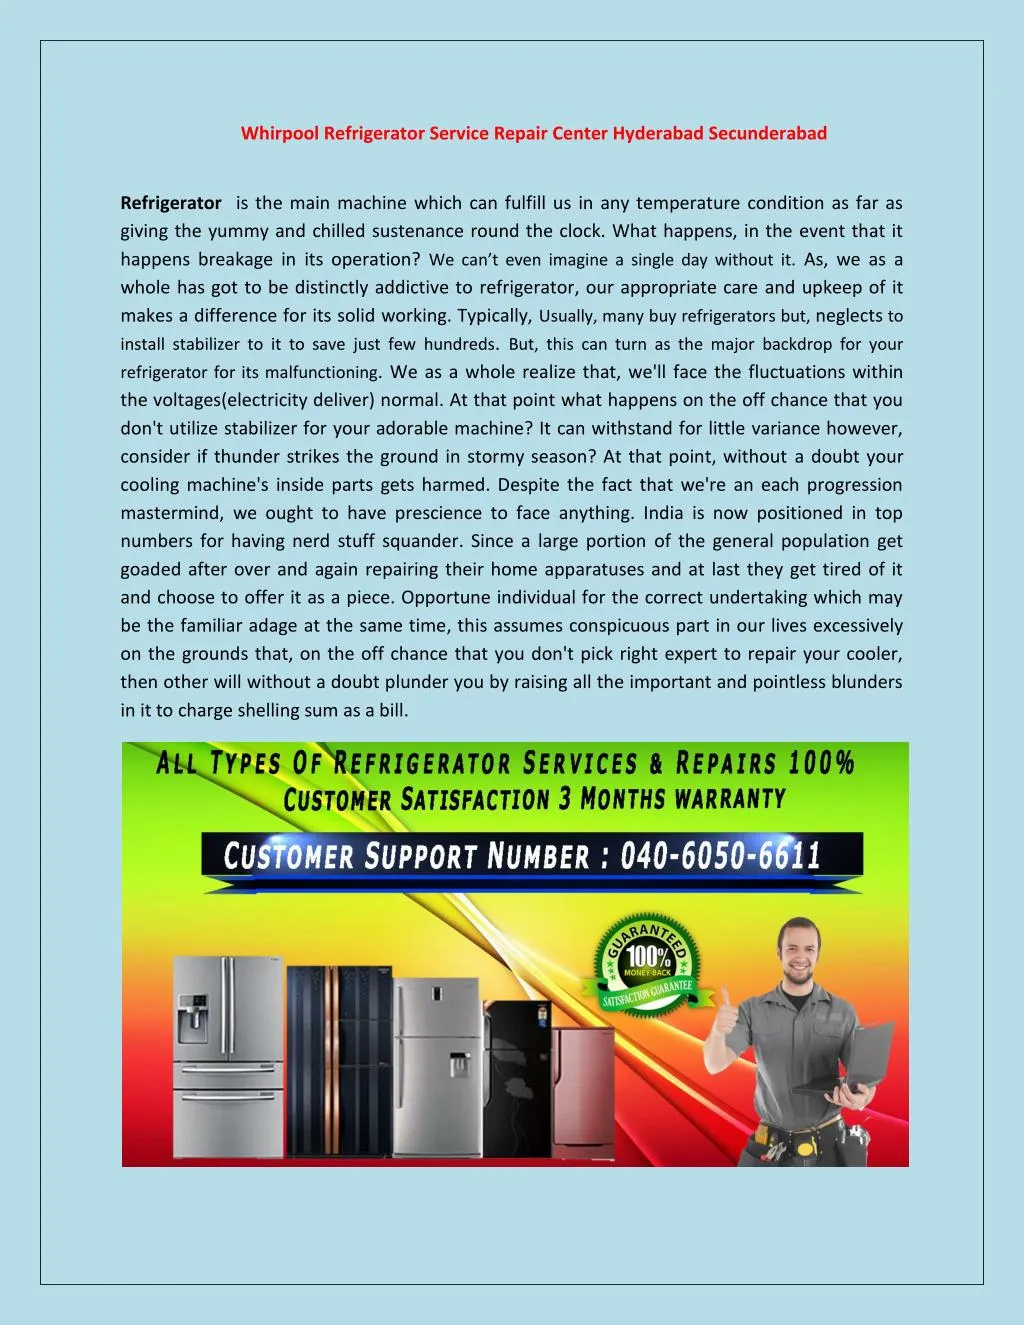 whirpool refrigerator service repair center n.